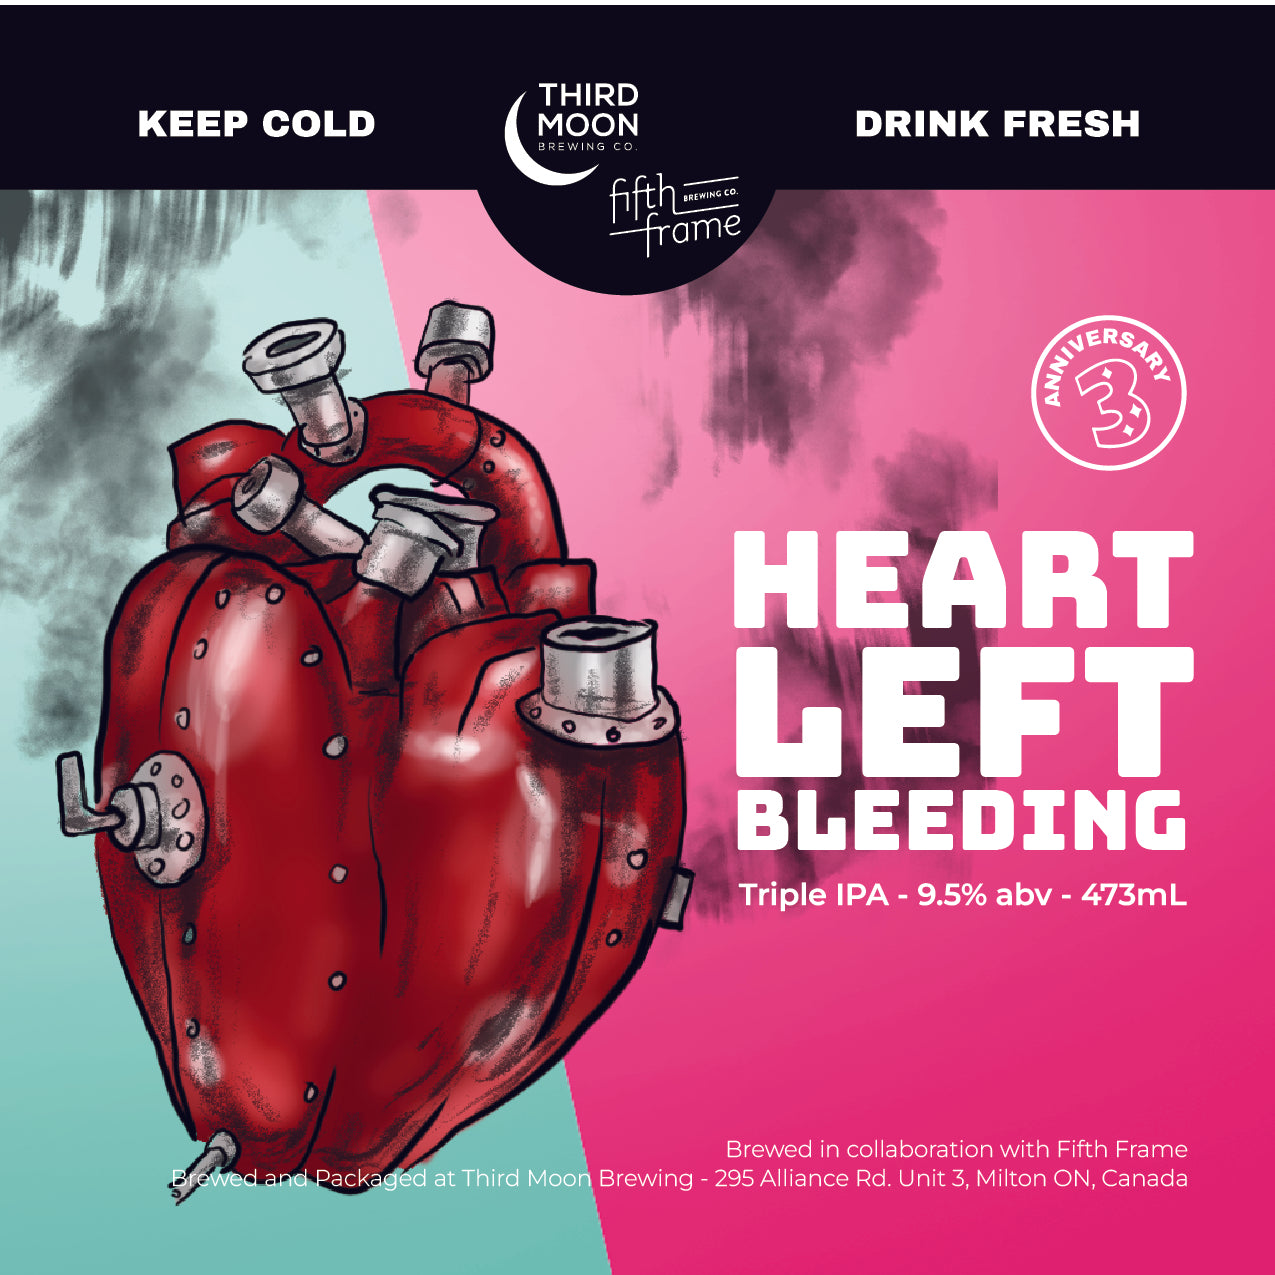 Triple IPA - 4-pk of "Heart Left Bleeding" tall cans